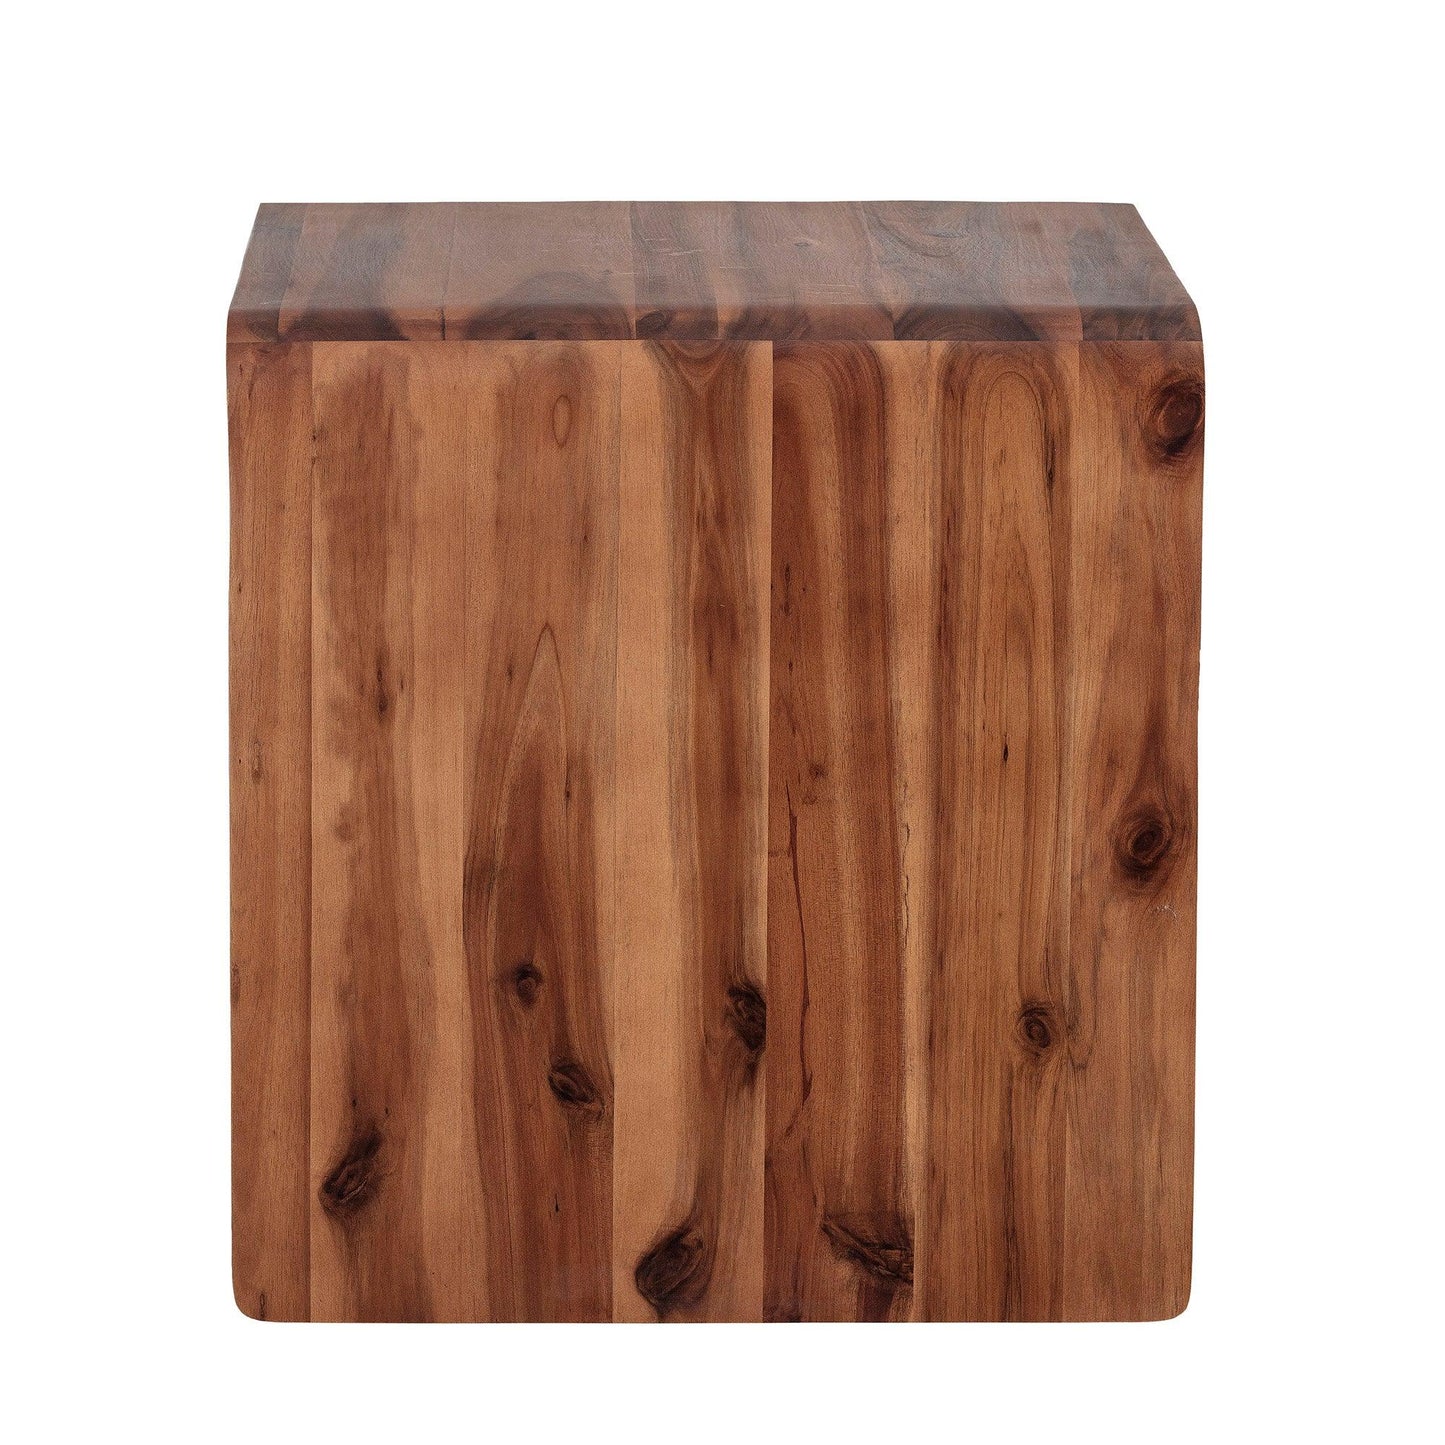 Brown Wood Side Table